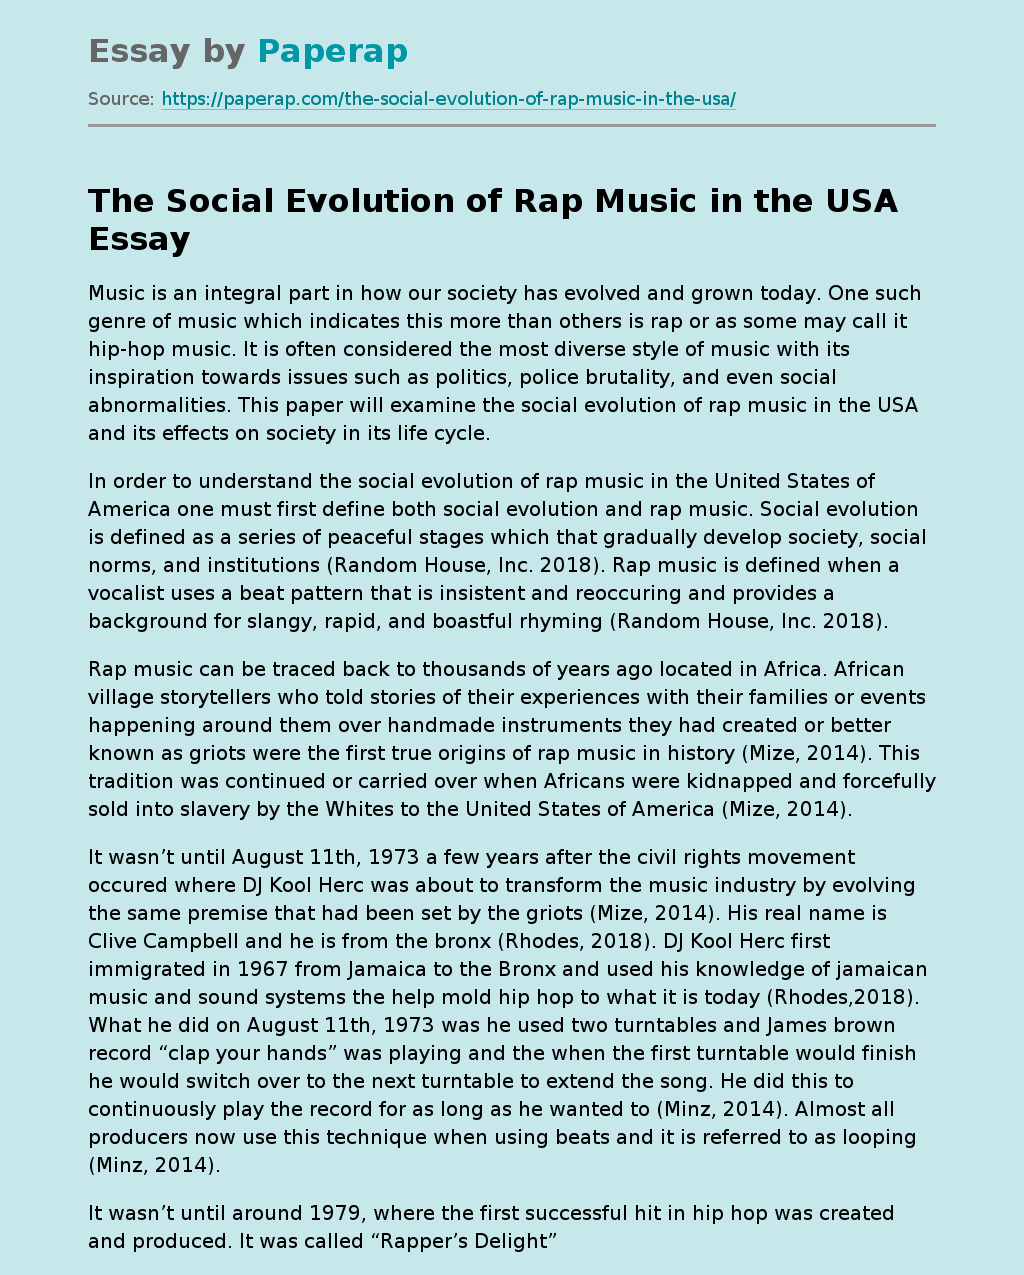 Rap Music's Societal Impact